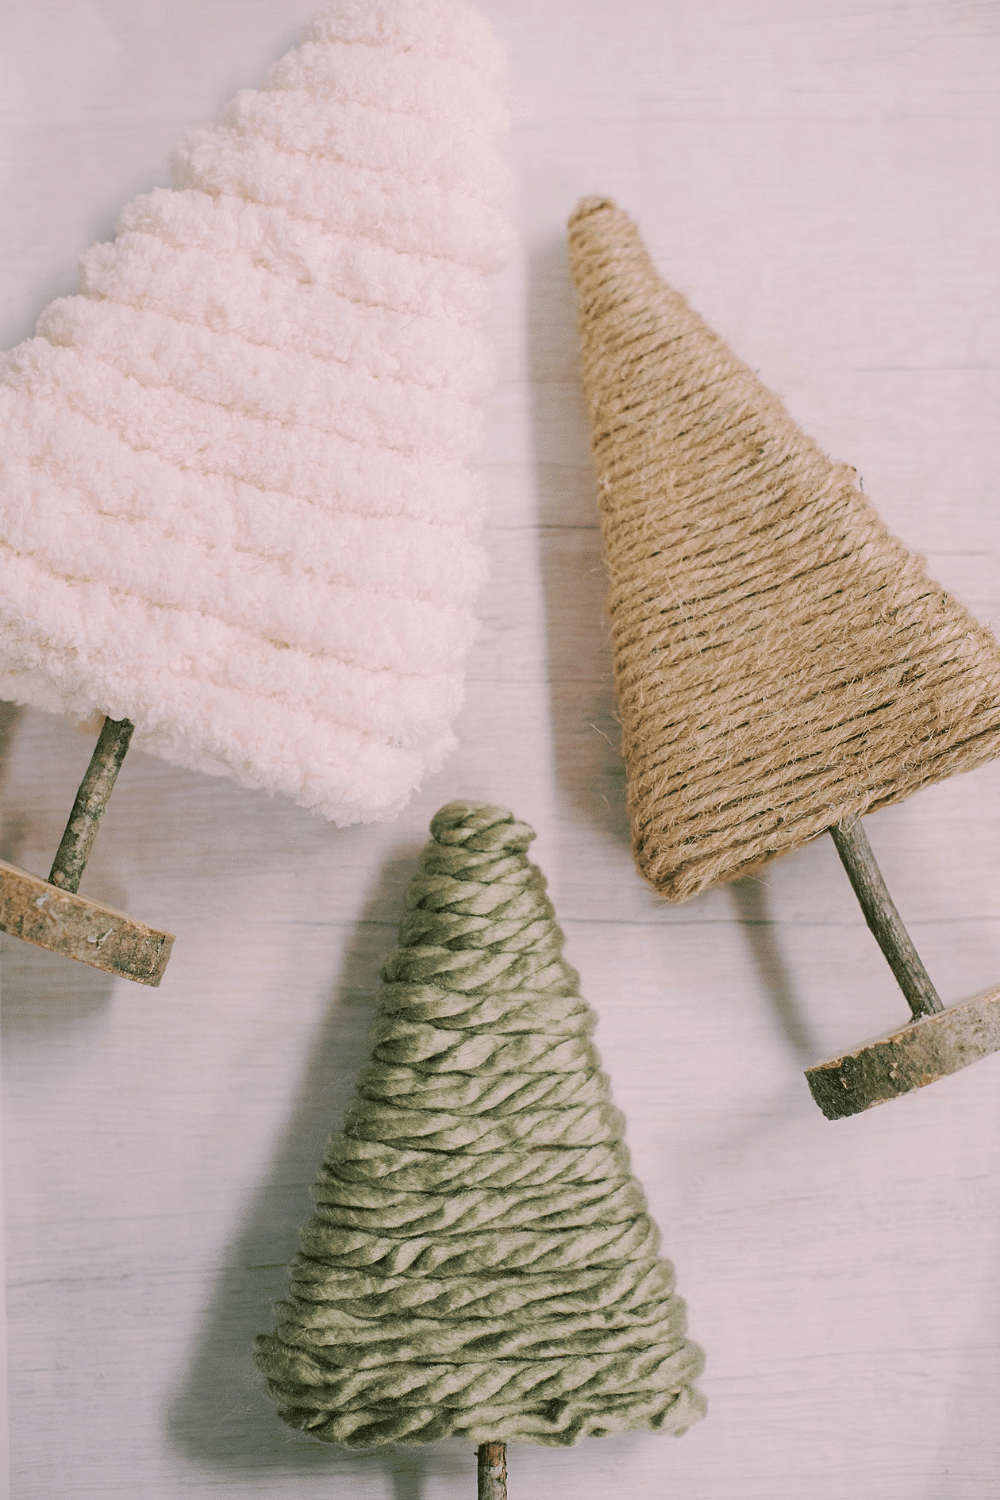 How to Make DIY Yarn-Wrapped Cardboard Trees